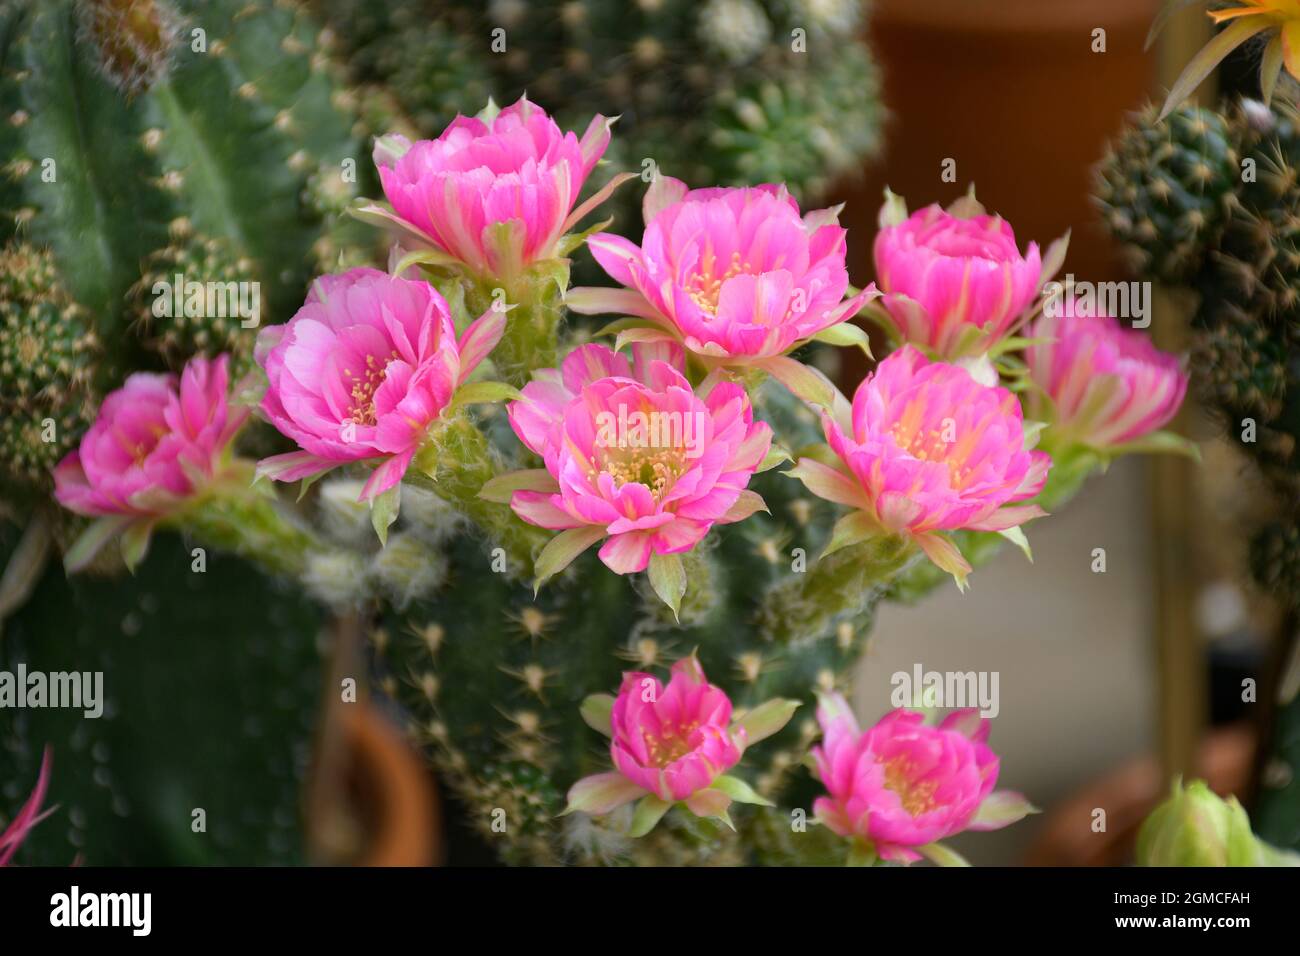 Pink hybrid lobivia spp. in cactus garden background. Stock Photo